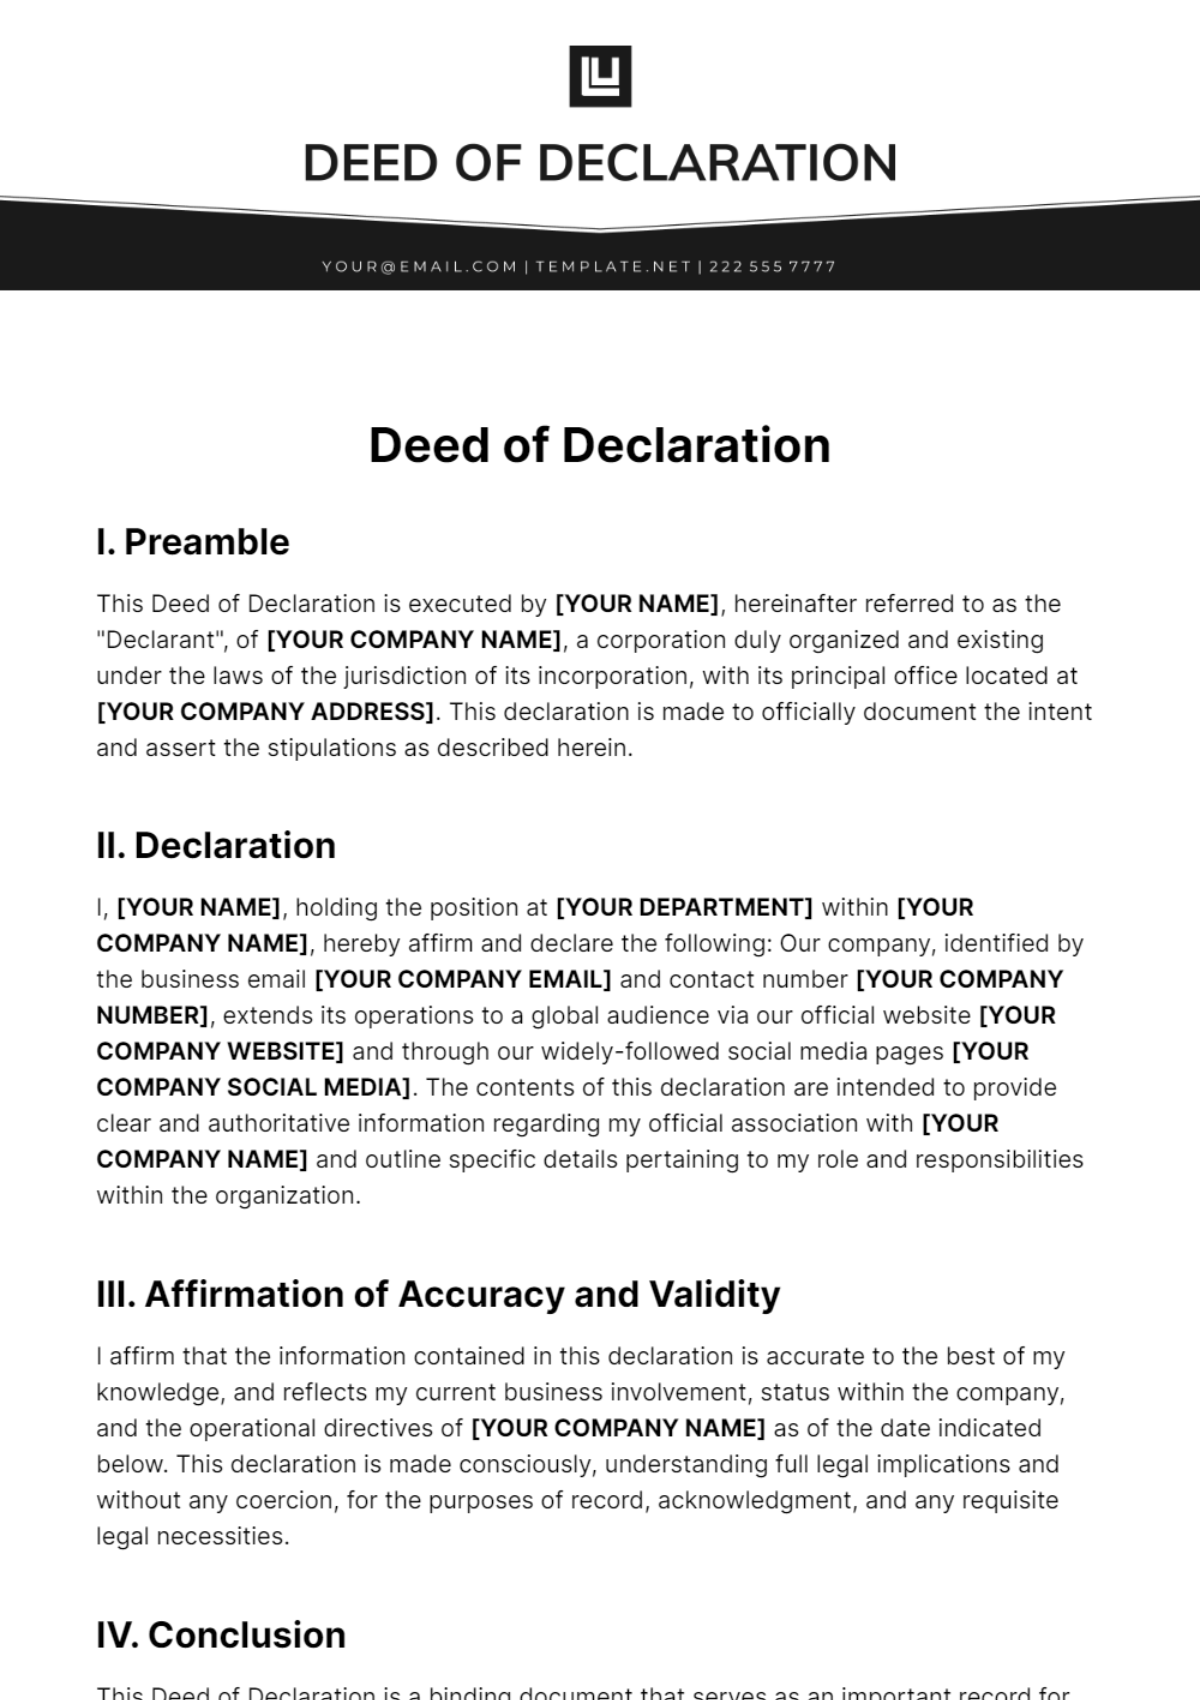 Deed of Declaration Template